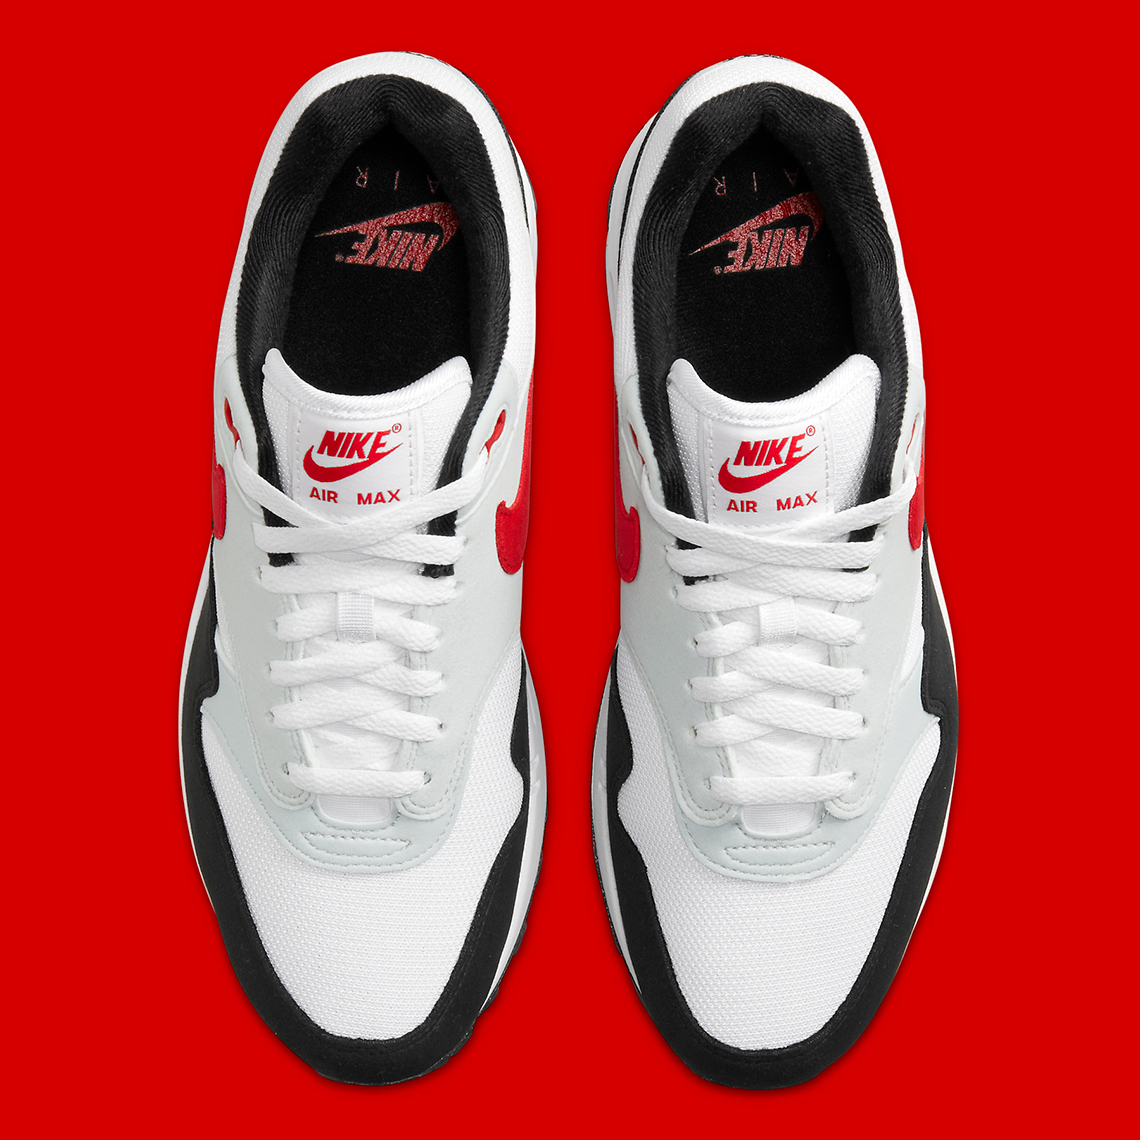 Nike nike dunk comfort denim dress code women shoes Black Red Fd9082 101 8